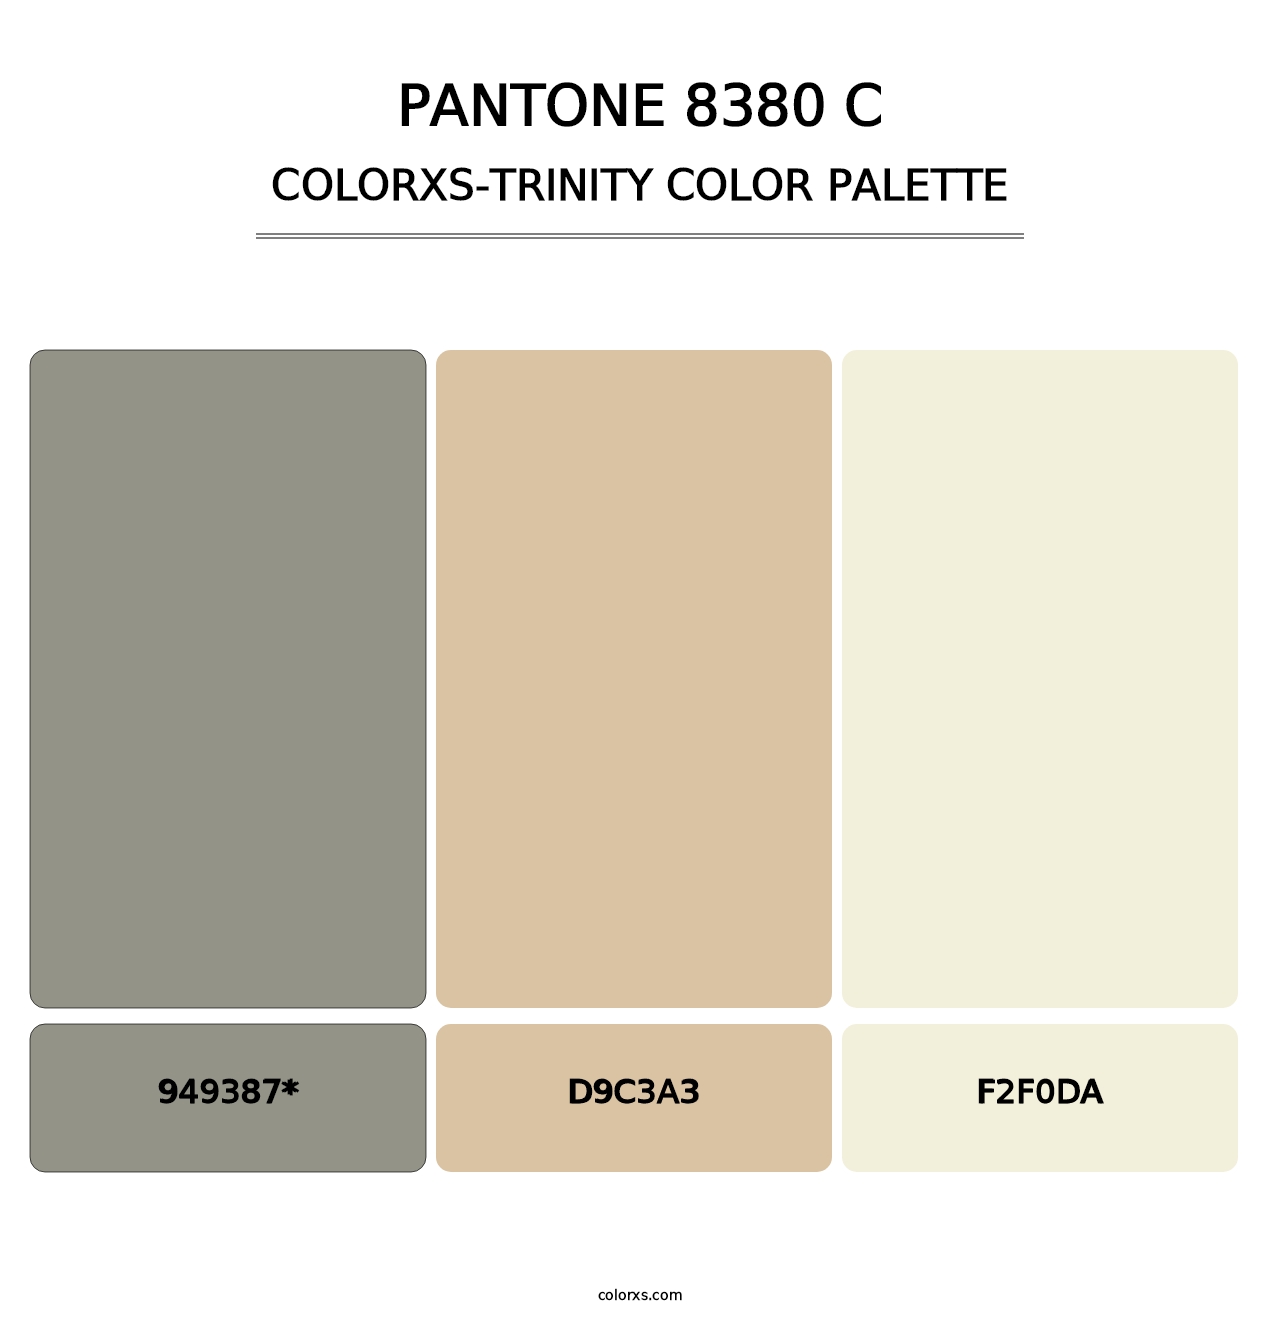 PANTONE 8380 C - Colorxs Trinity Palette